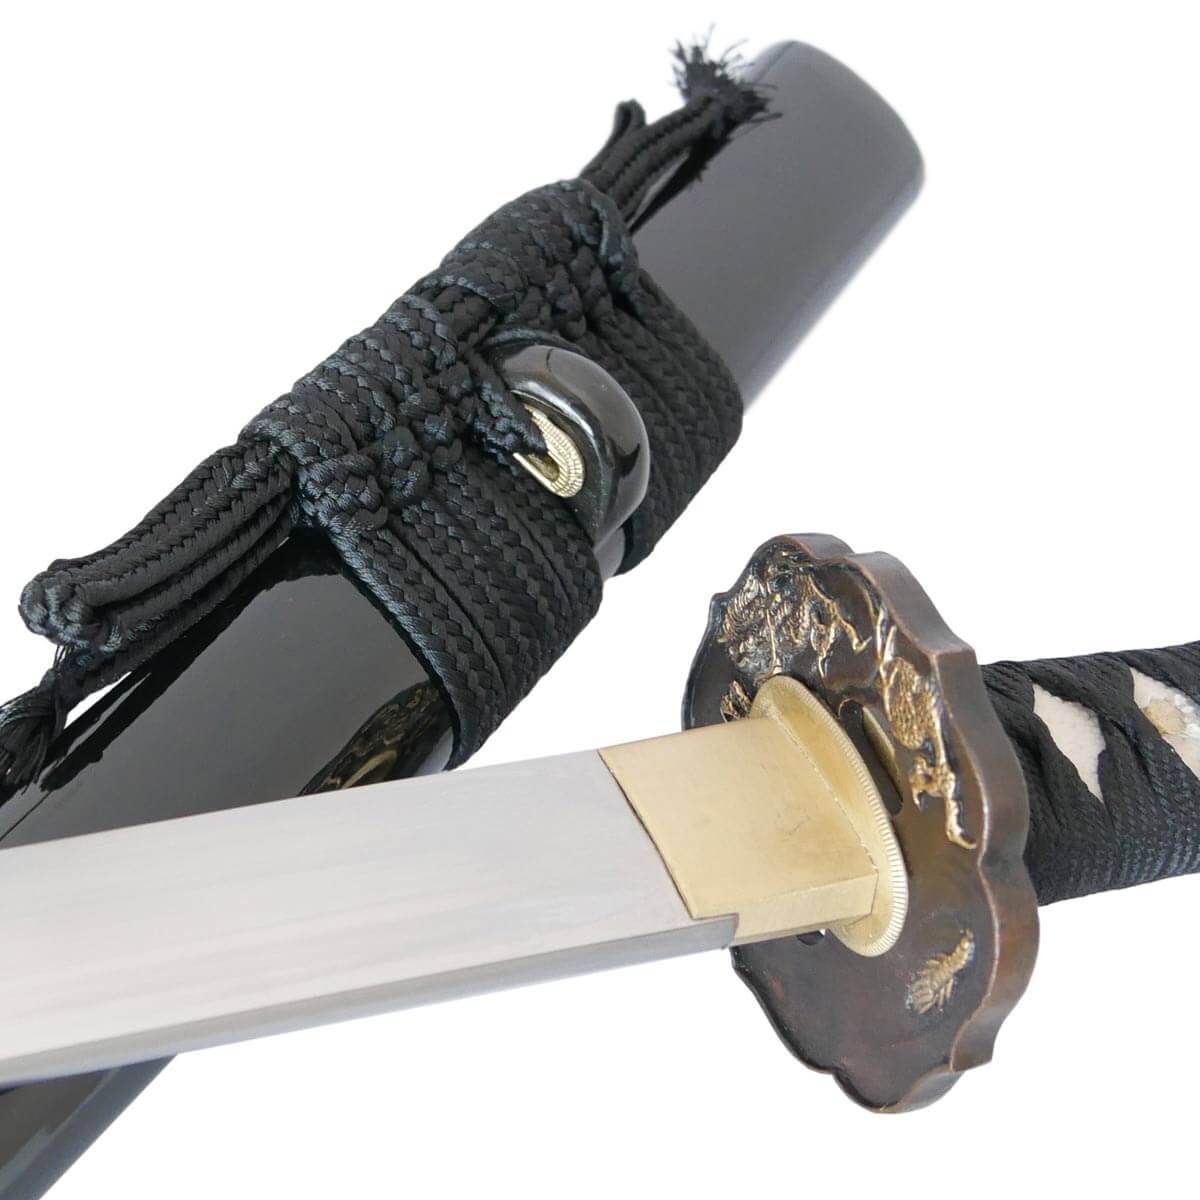 Katana Kuro Tatsu Samuraischwert Metall Klinge aus Federstahl sehr scharf! von Toshiro Swords